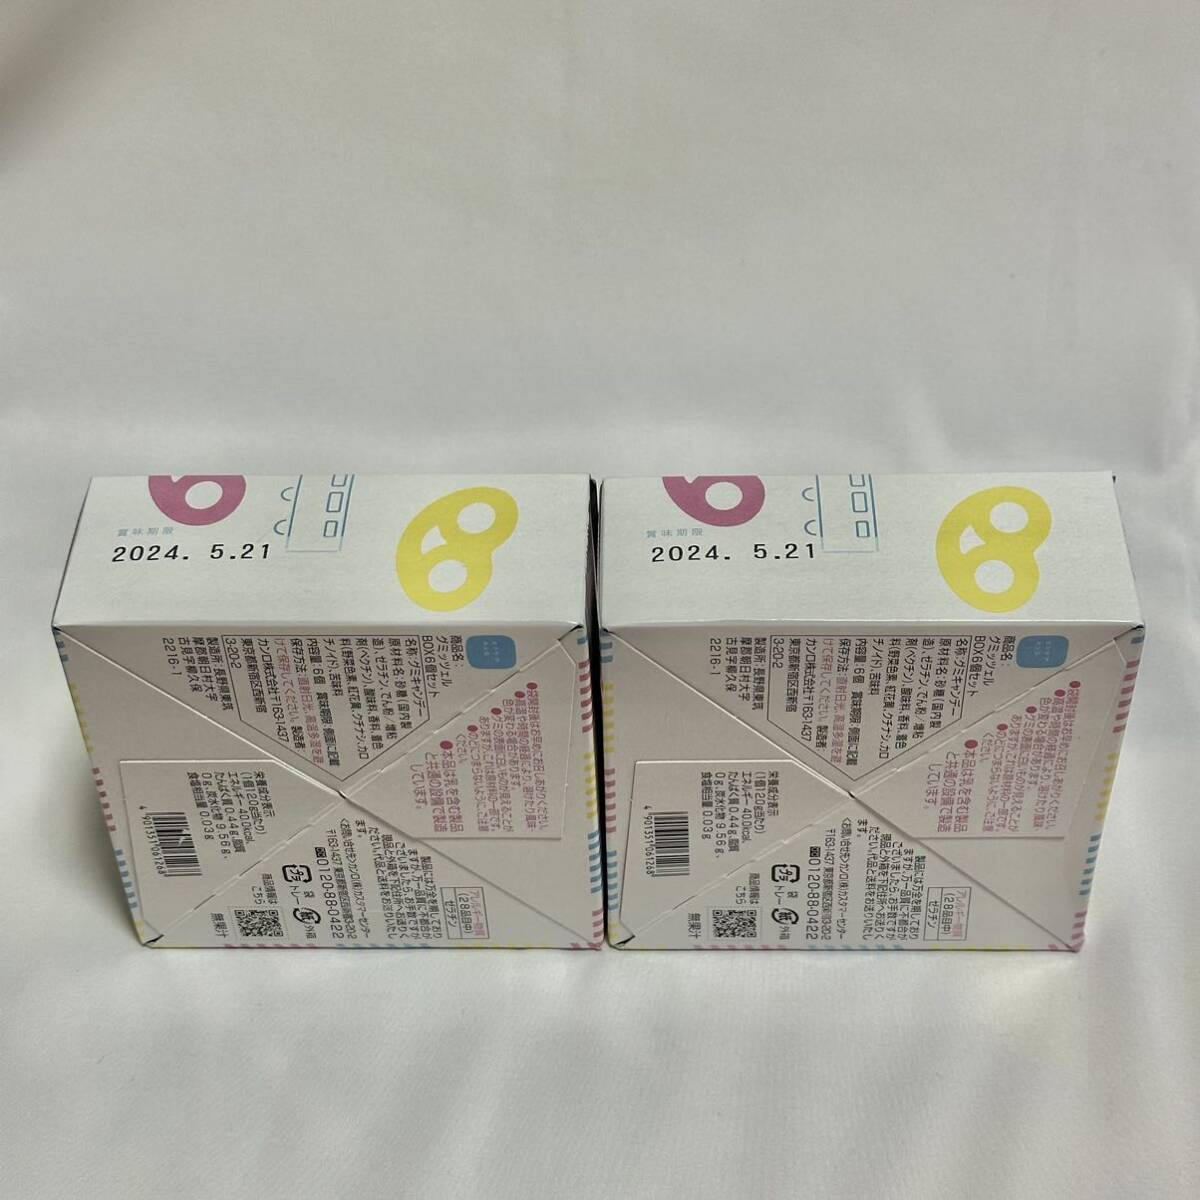 hitotsub can rogmitserubox 6 piece set ( Tokyo station limitation )×2 box 